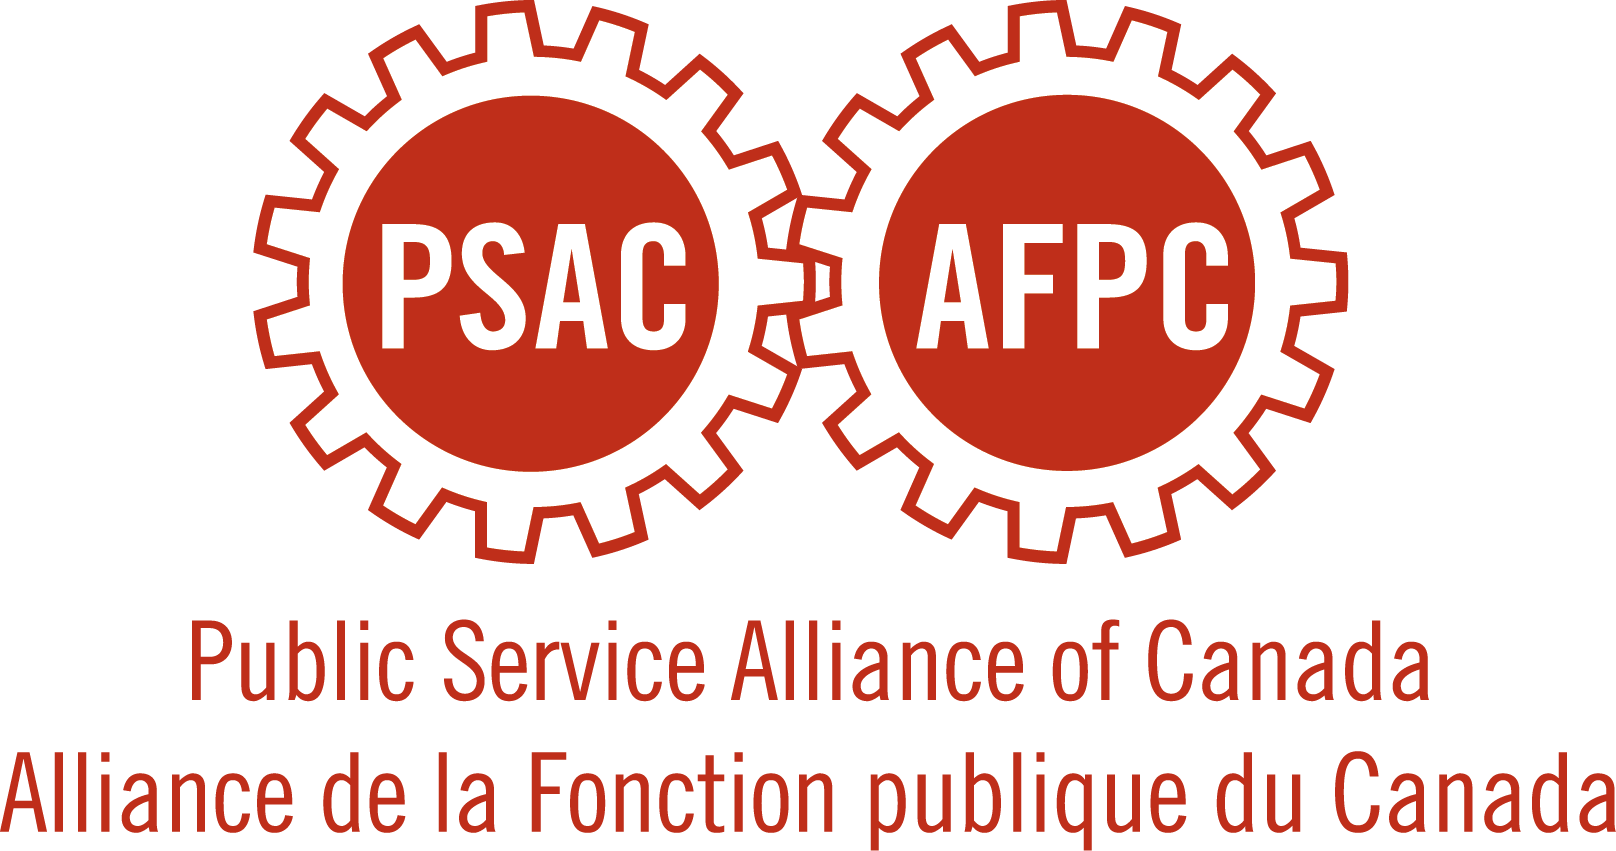 public service alliance logo english.png